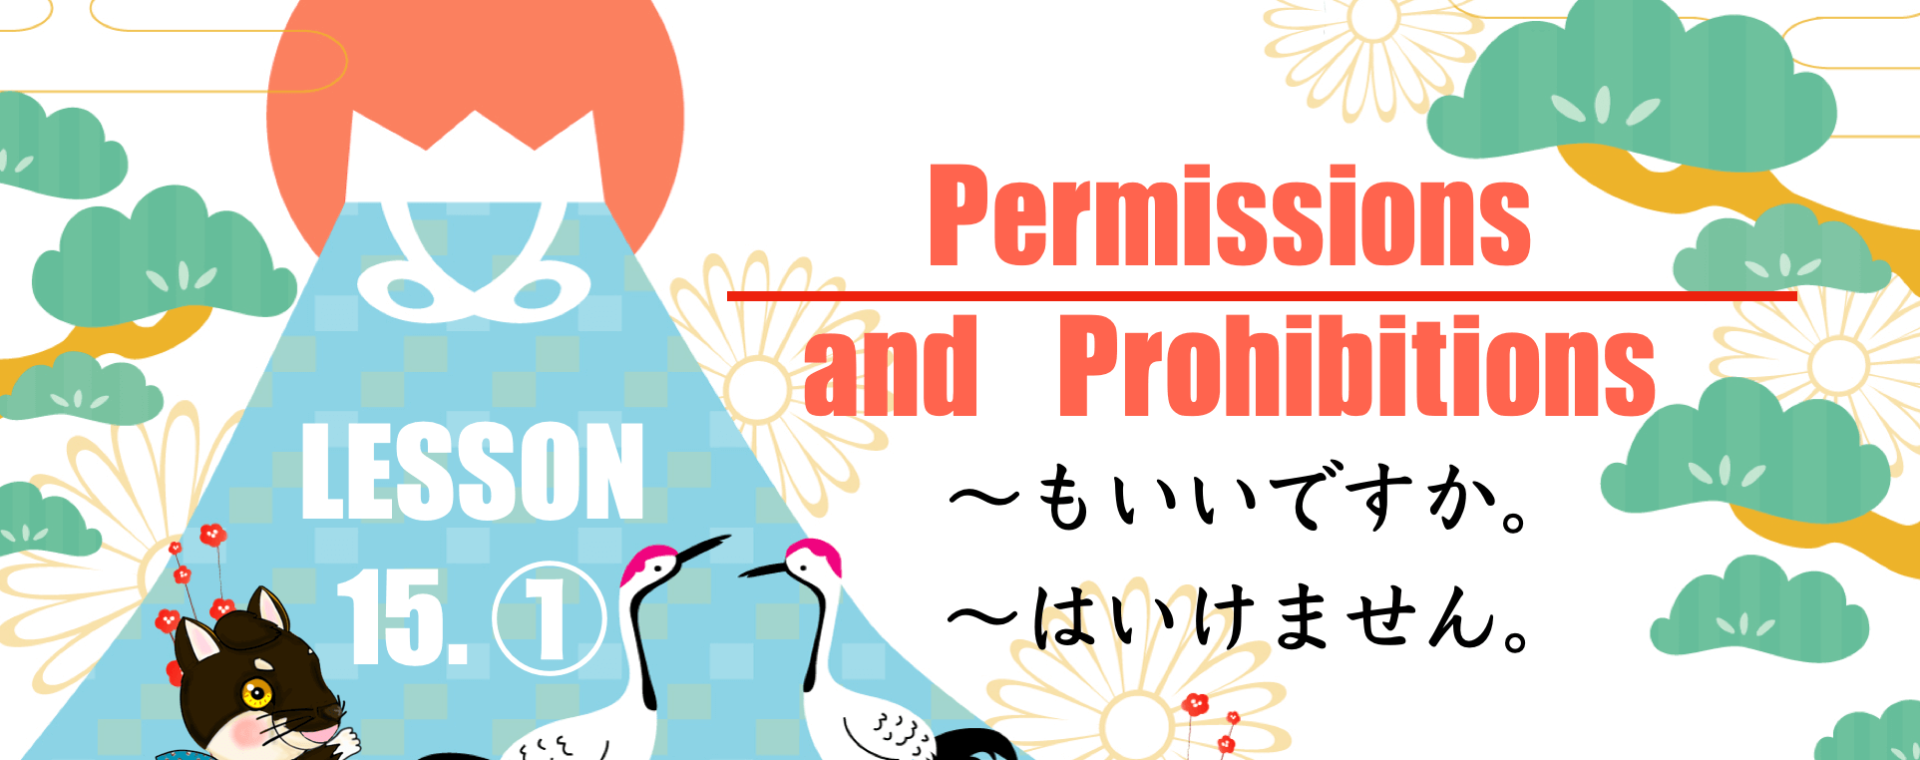 minna no nihongo 15 permissions and prohibitions